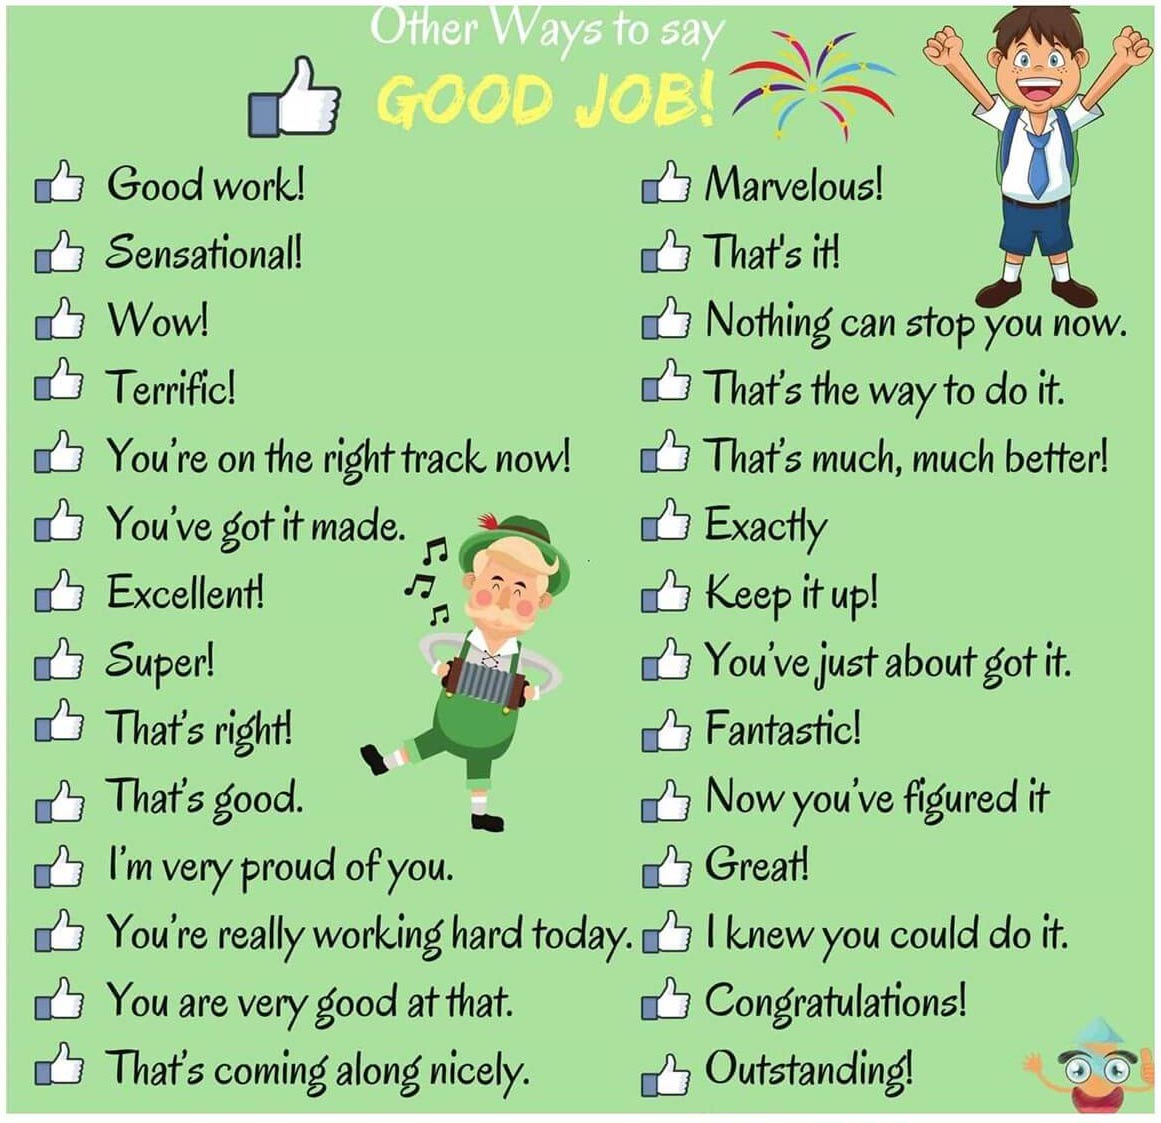 Other ways to say Good Job